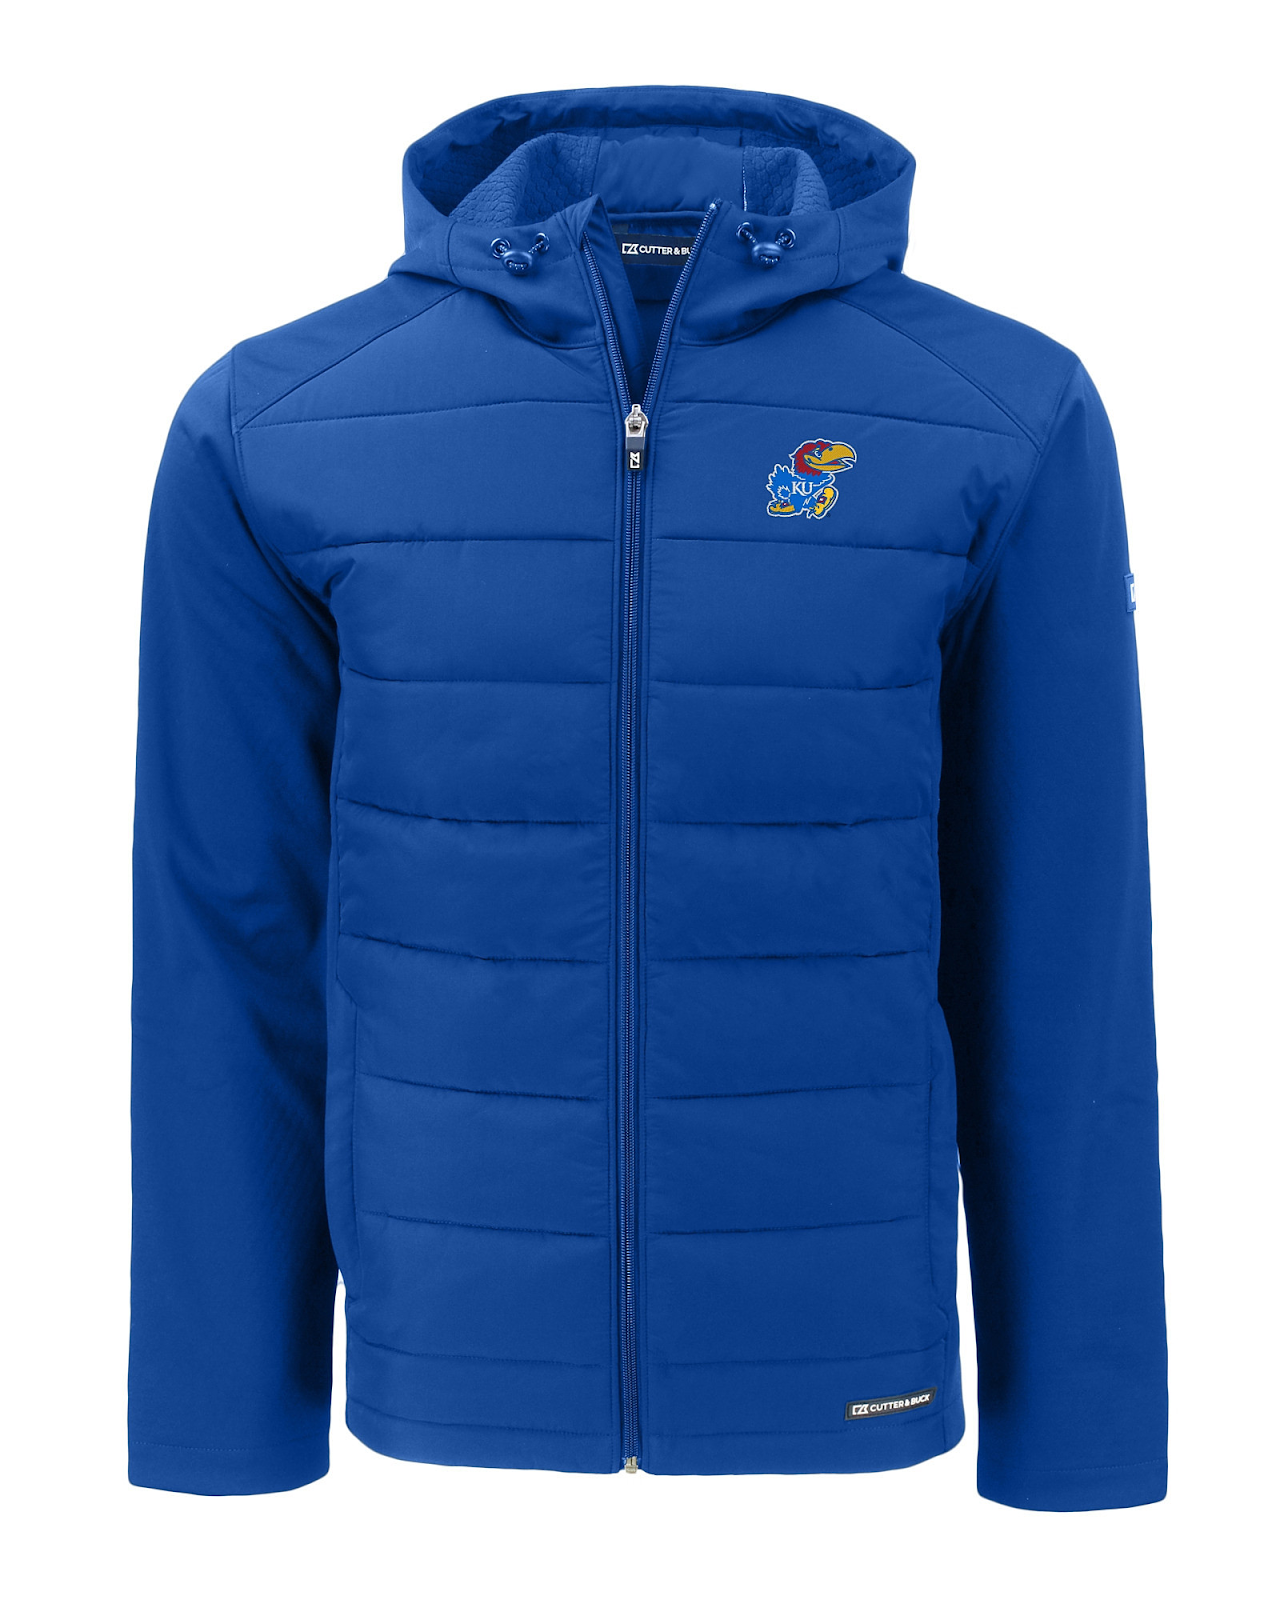 University of Kansas men’s wind and water-resistant jacket